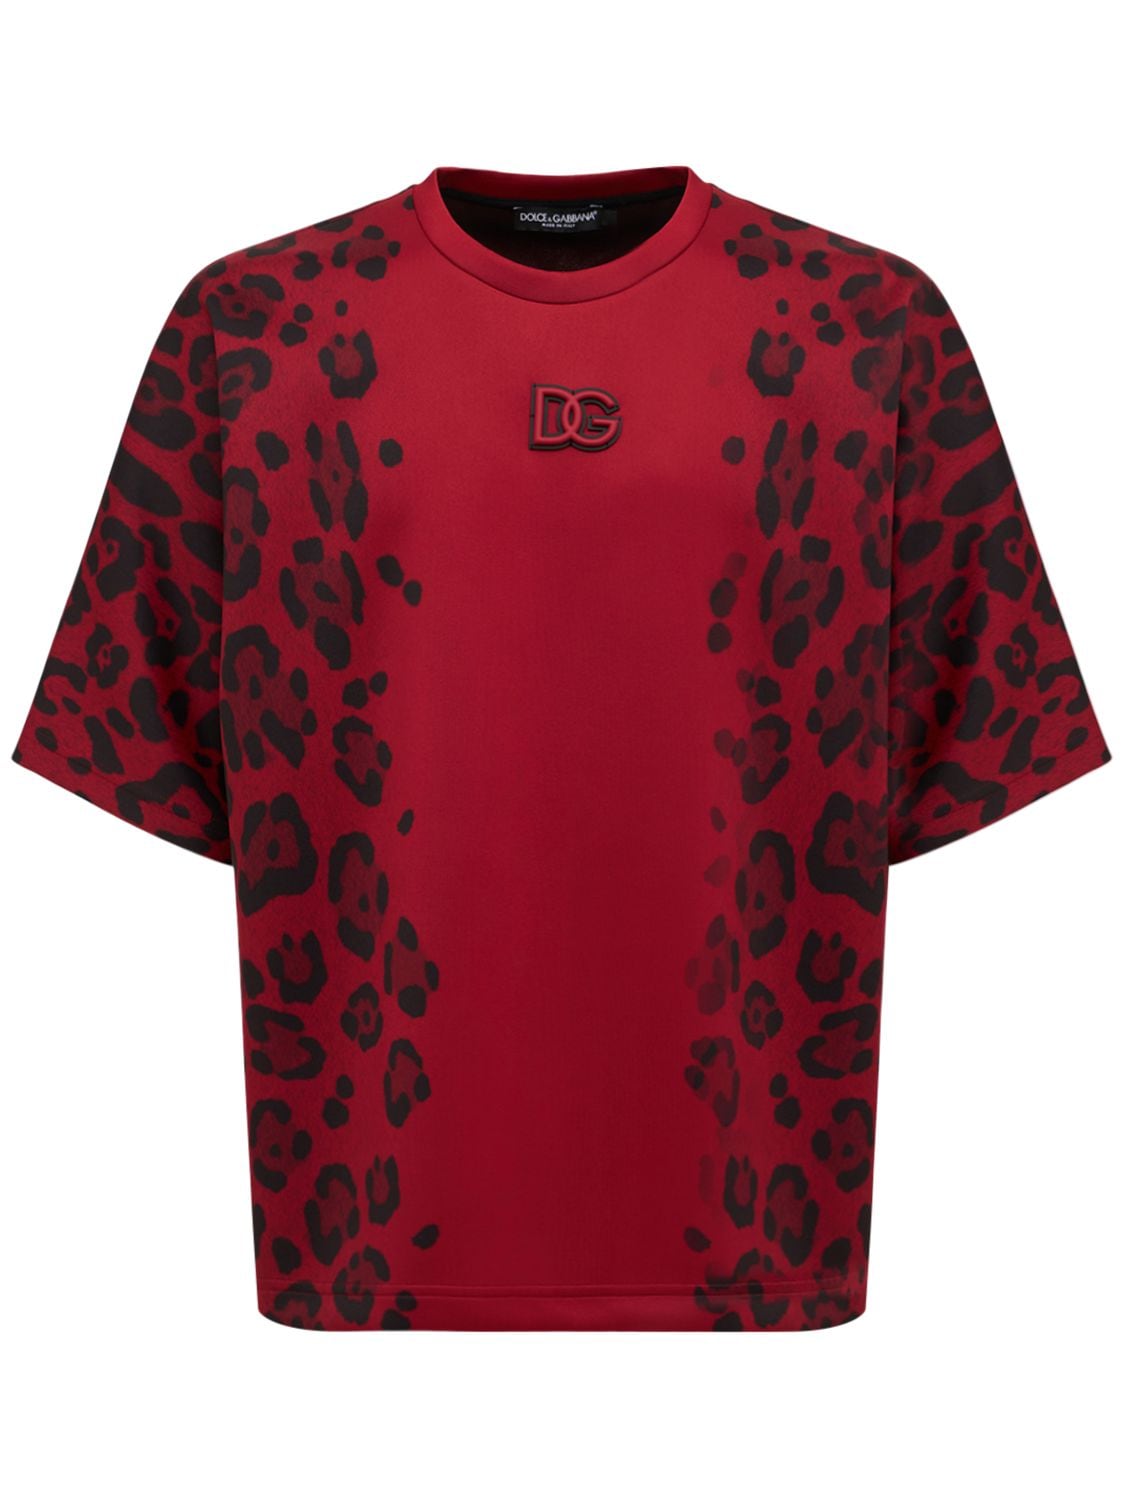 Dolce \u0026 Gabbana - Leopard print tech t-shirt - Red/Black | Luisaviaroma